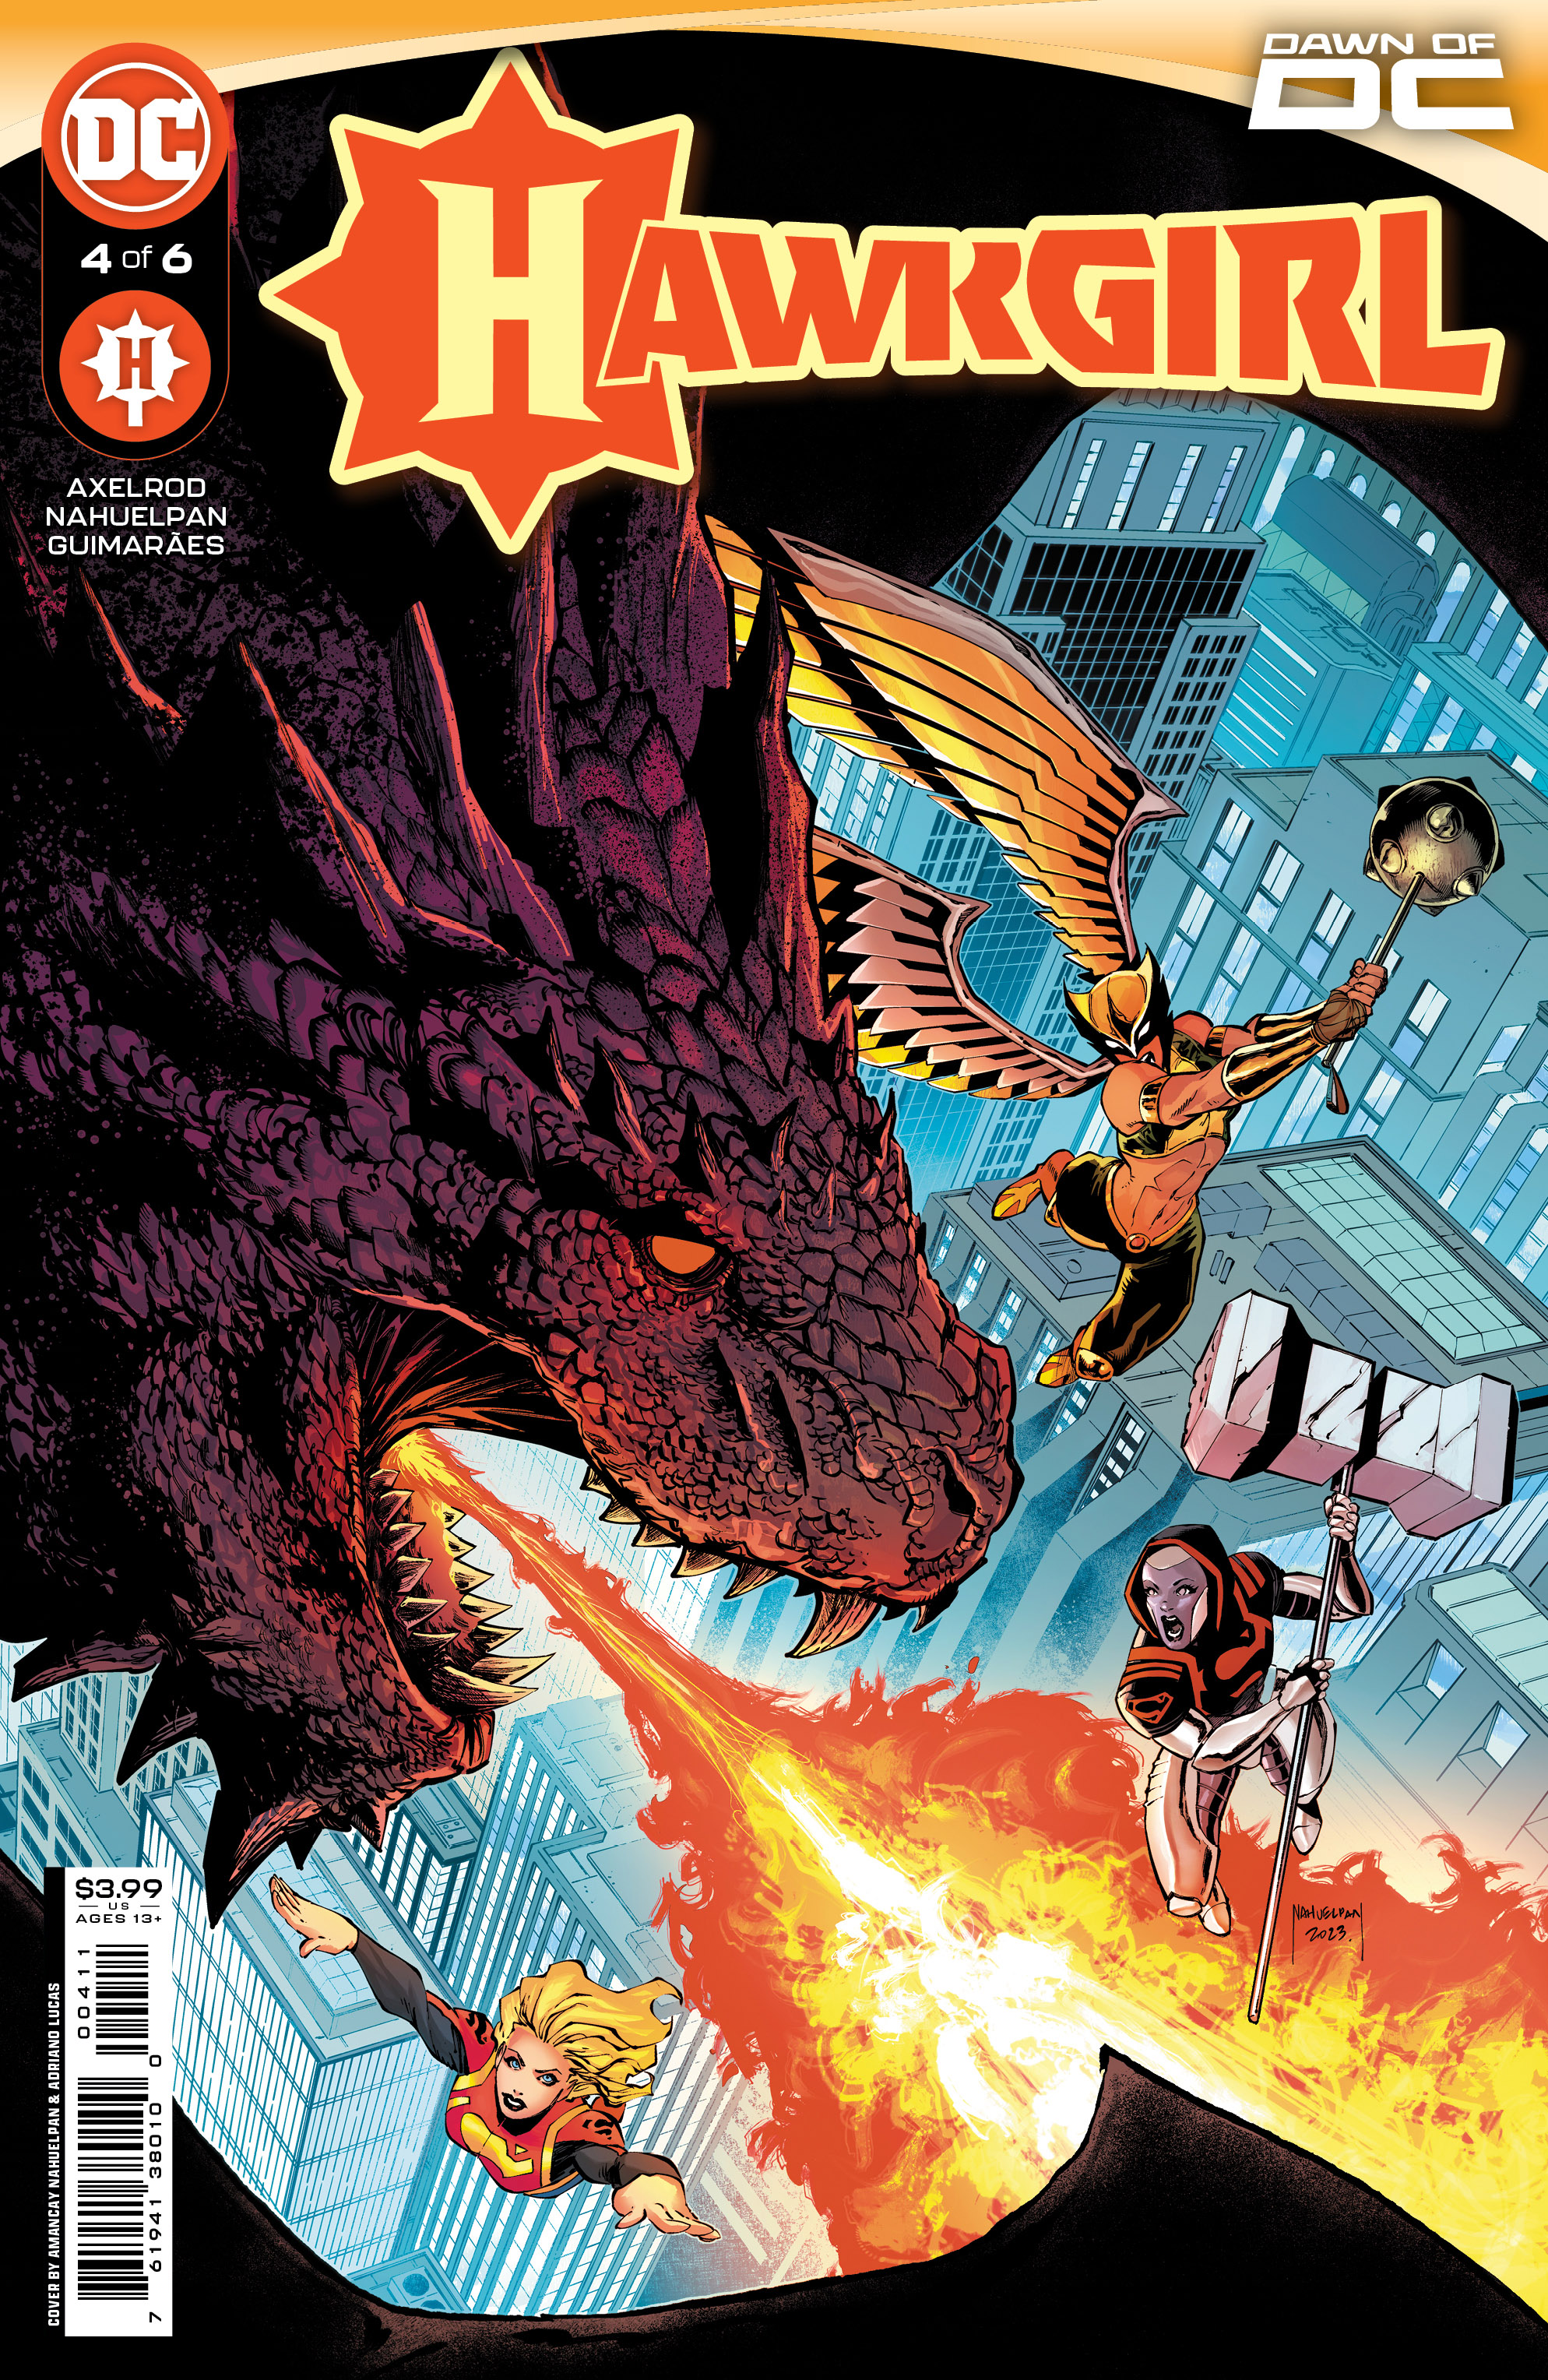 Hawkgirl #4 Cover A Amancay Nahuelpan (Of 6)